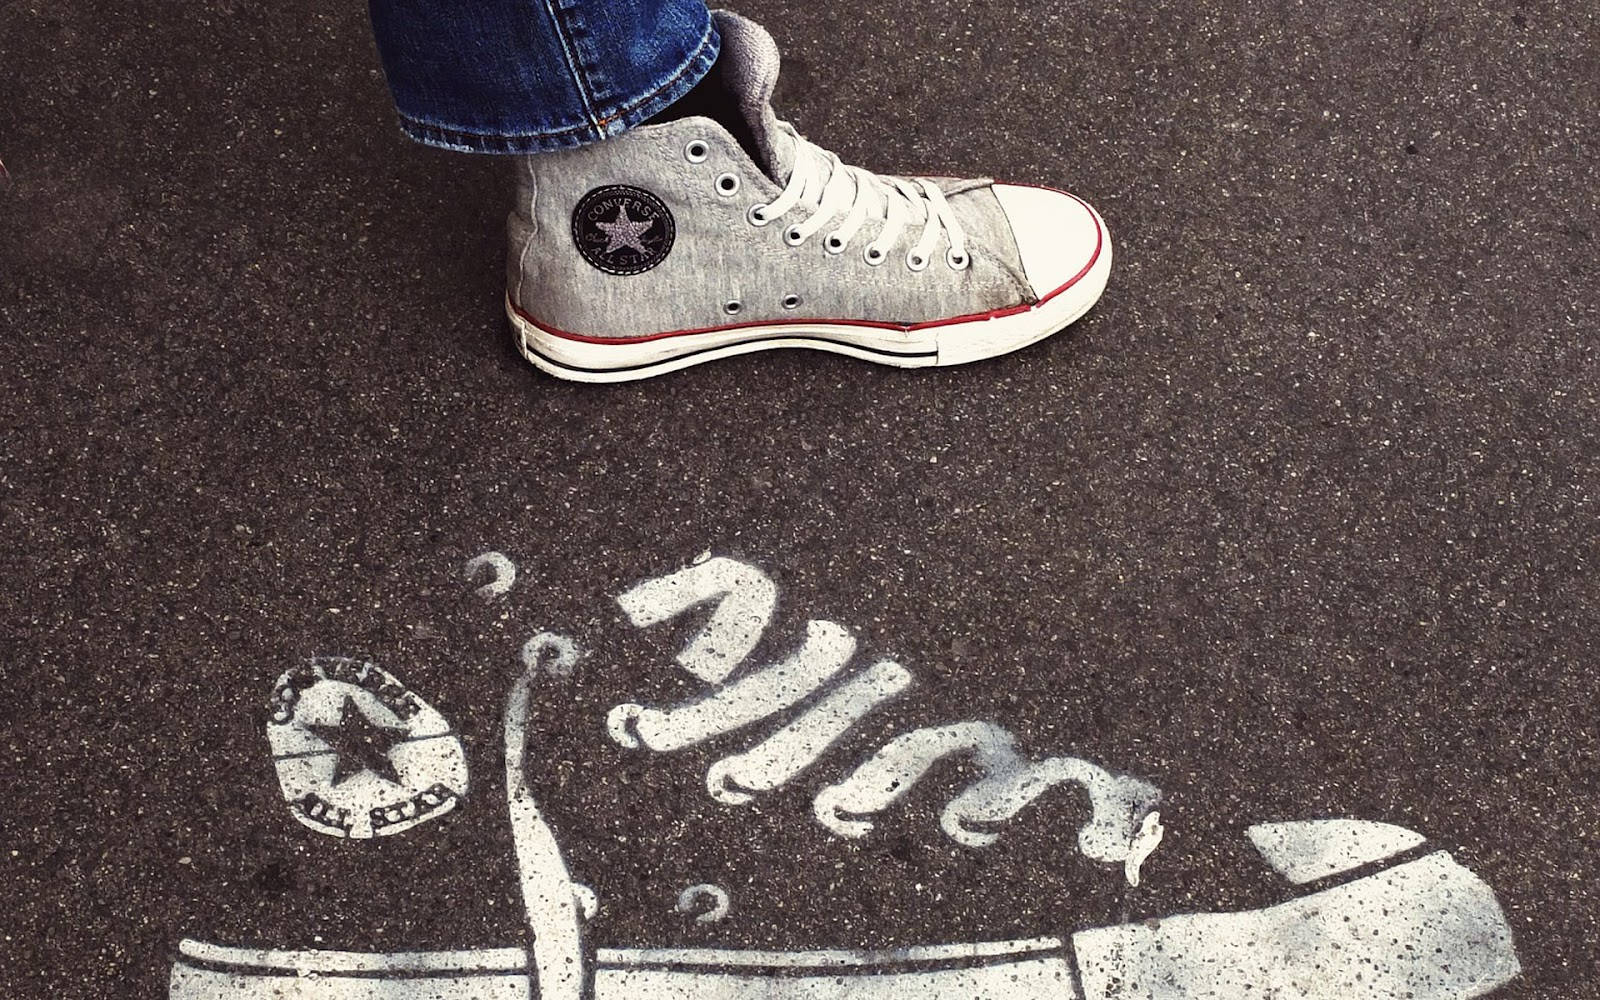 Caption: Stylish Converse Sneaker Artwork On Chalkboard Background